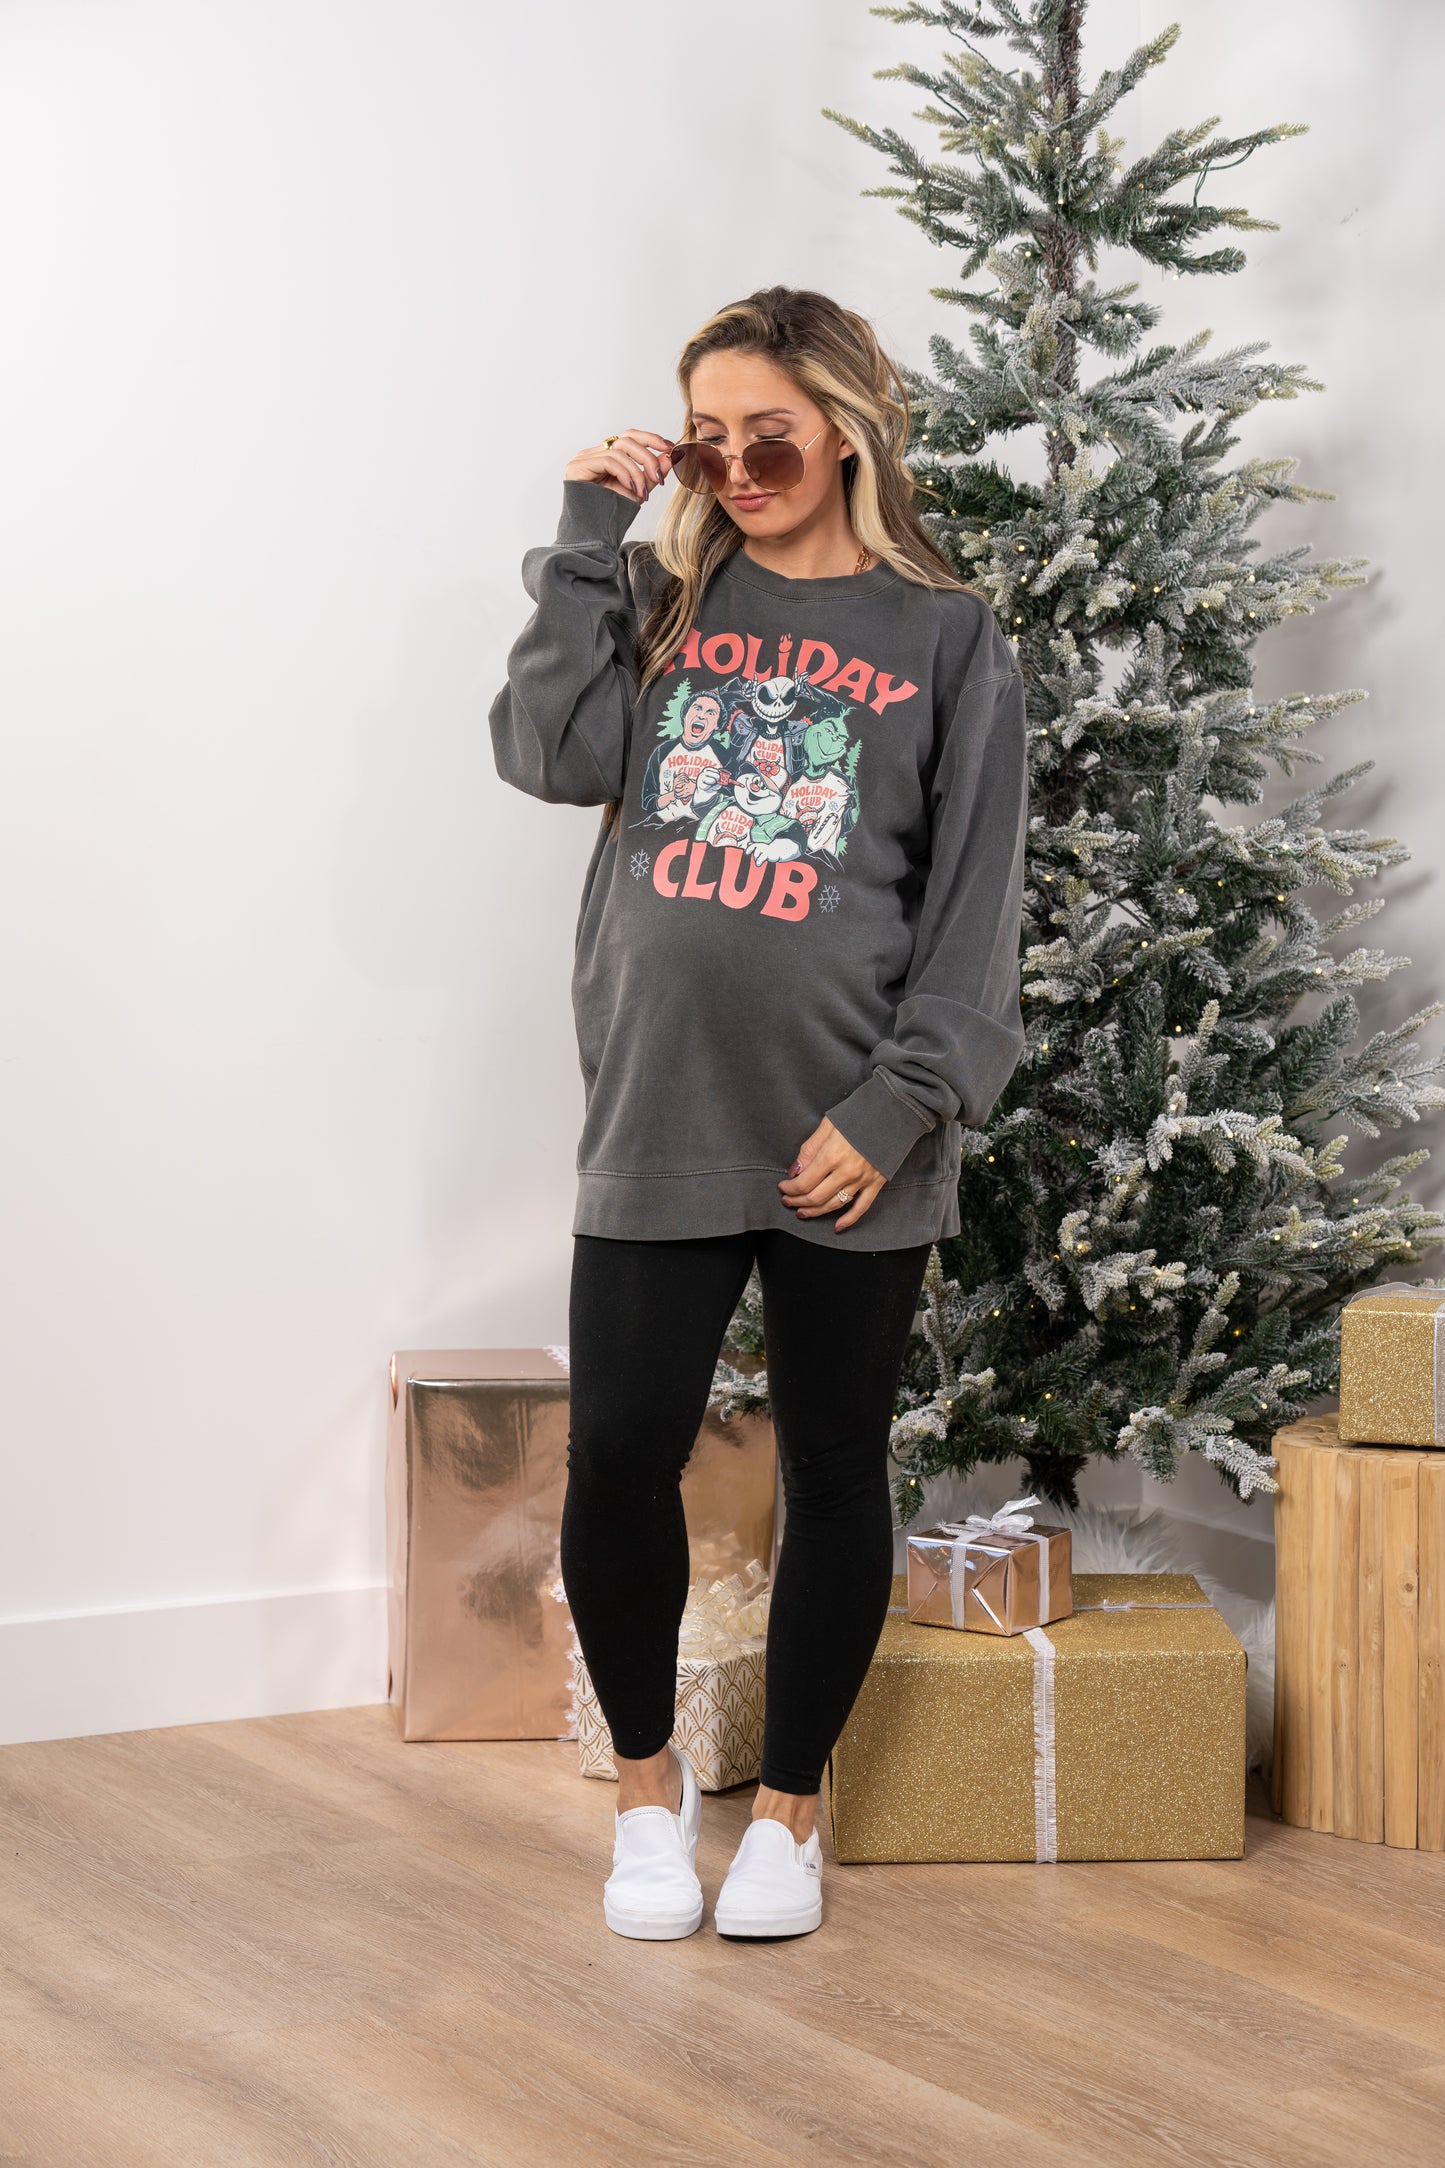 Holiday Club (Graphic) - Sweatshirt (Charcoal)